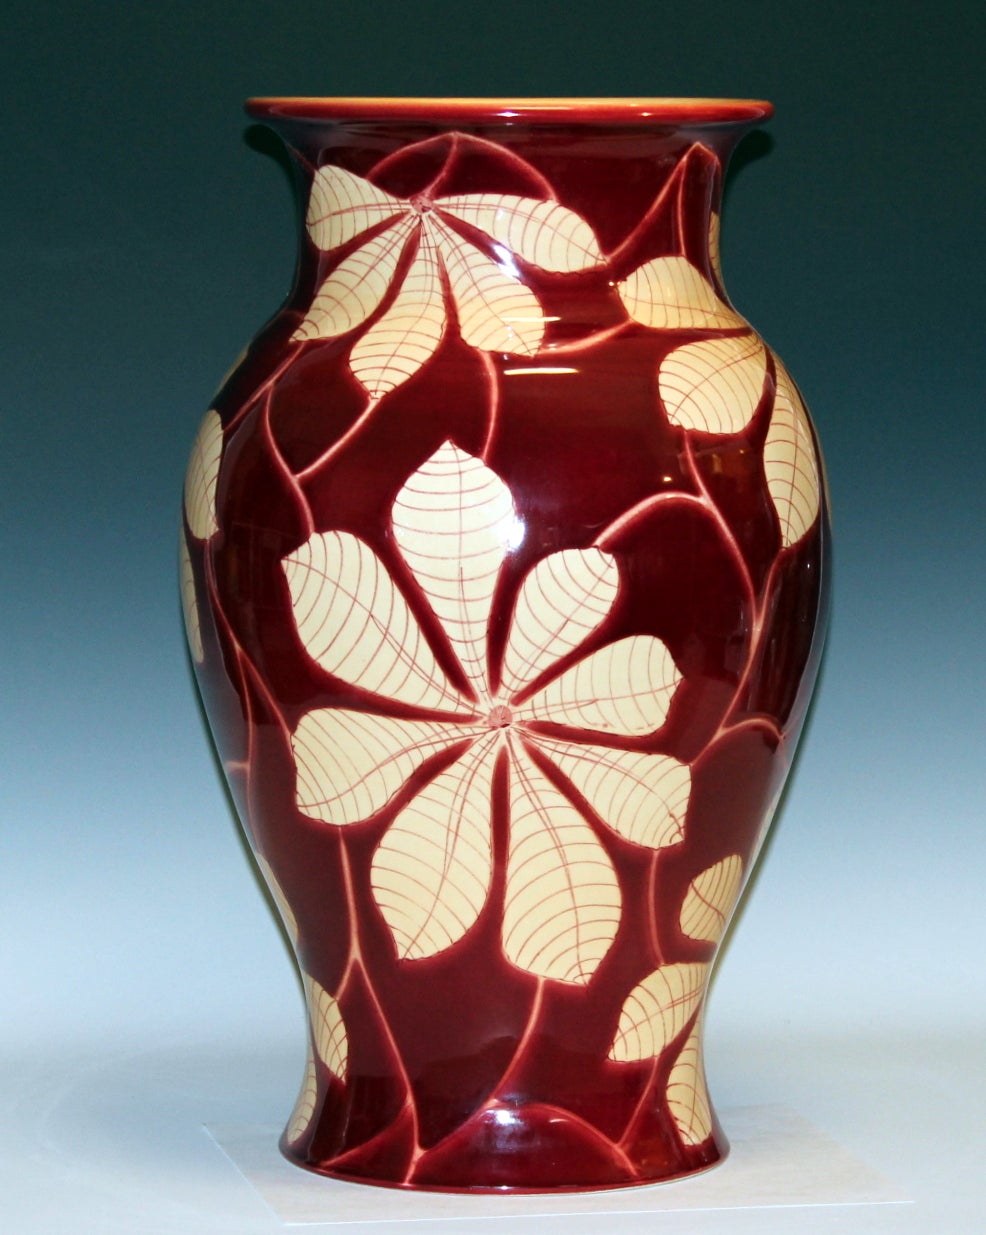 Large Vintage Italian Pottery Vase for Wannamaker's